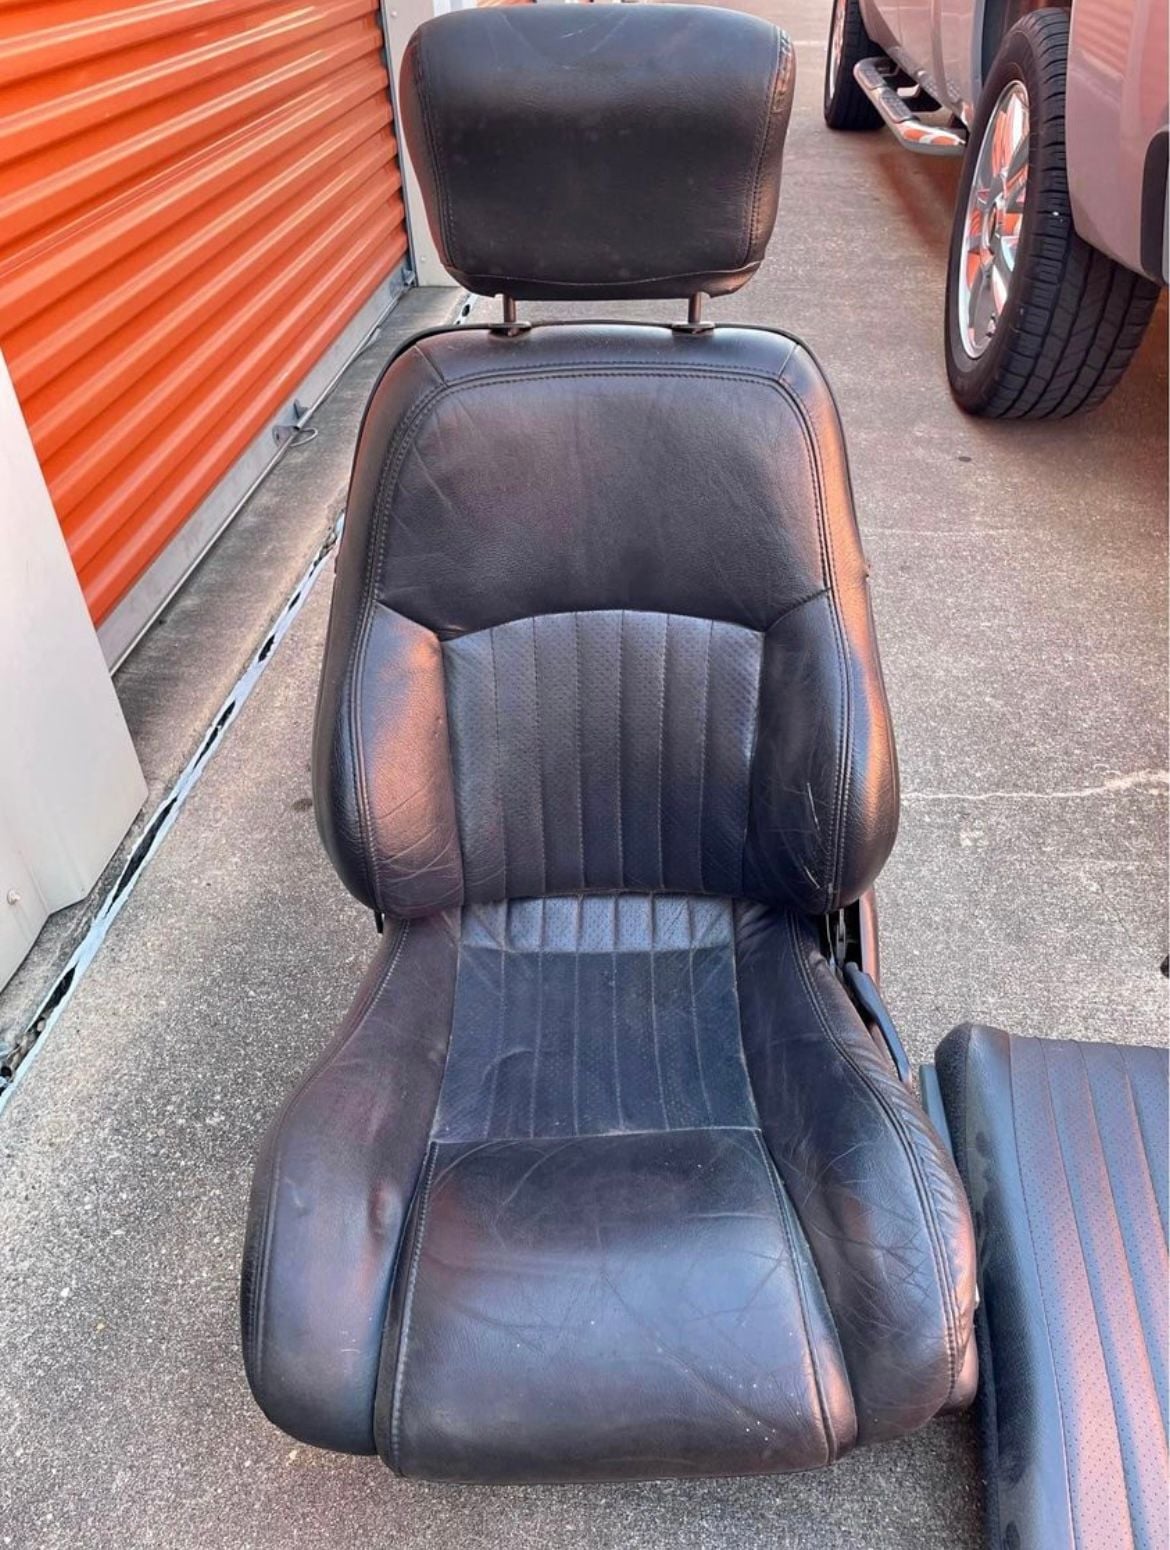 Interior/Upholstery - Trans Am/Fbody black ebony leather seats - Used - 0  All Models - Bastrop, TX 78602, United States